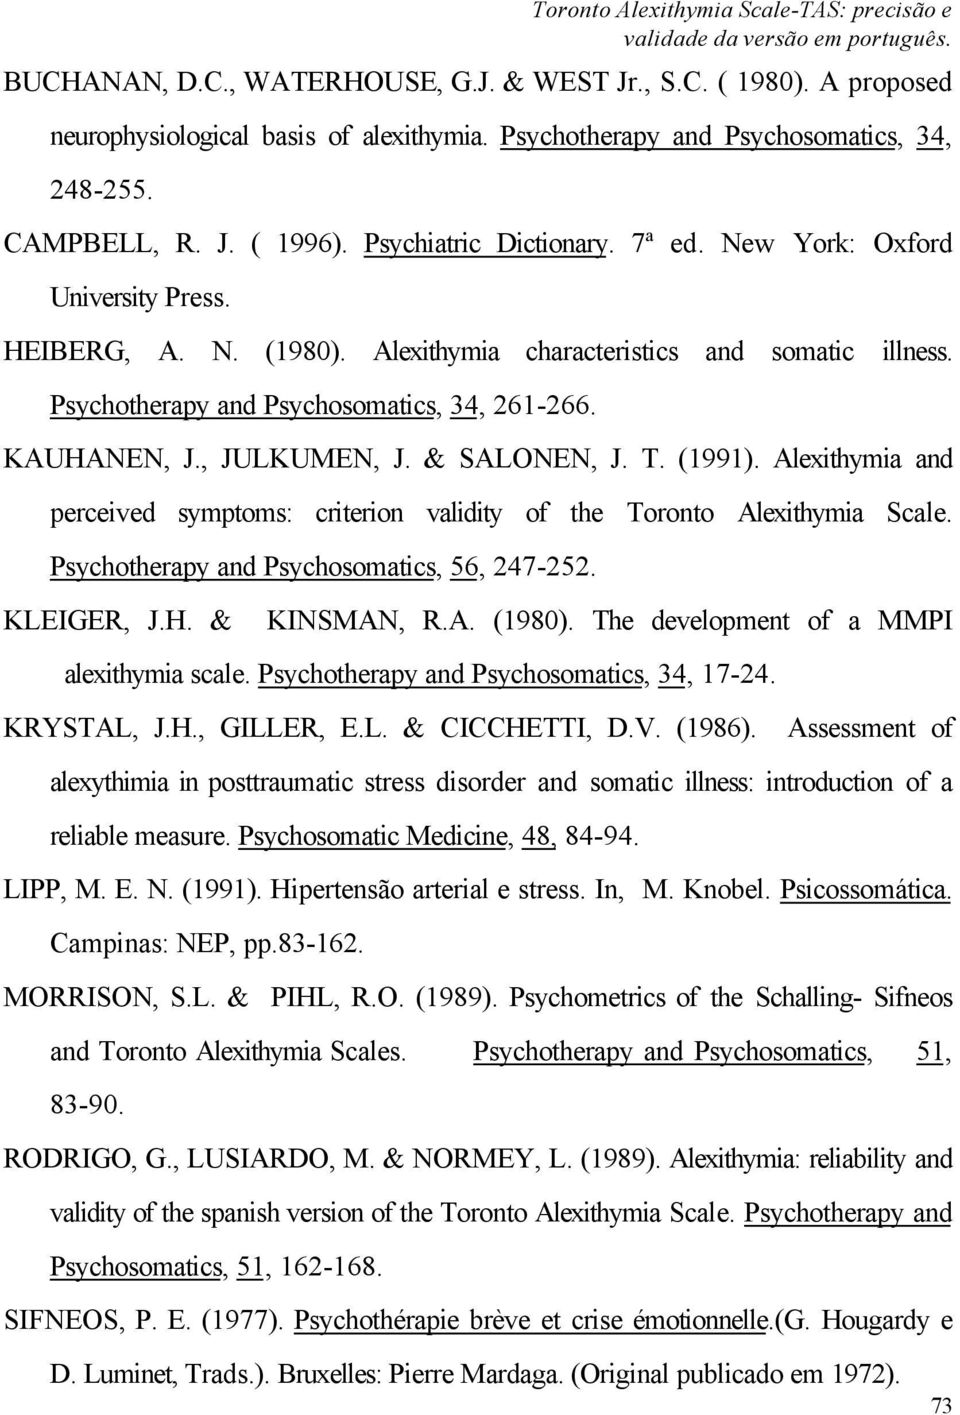 Alexithymia characteristics and somatic Psychotherapy and Psychosomatics, 34, 261-266. illness. KAUHANEN, J., JULKUMEN, J. & SALONEN, J. T. (1991).